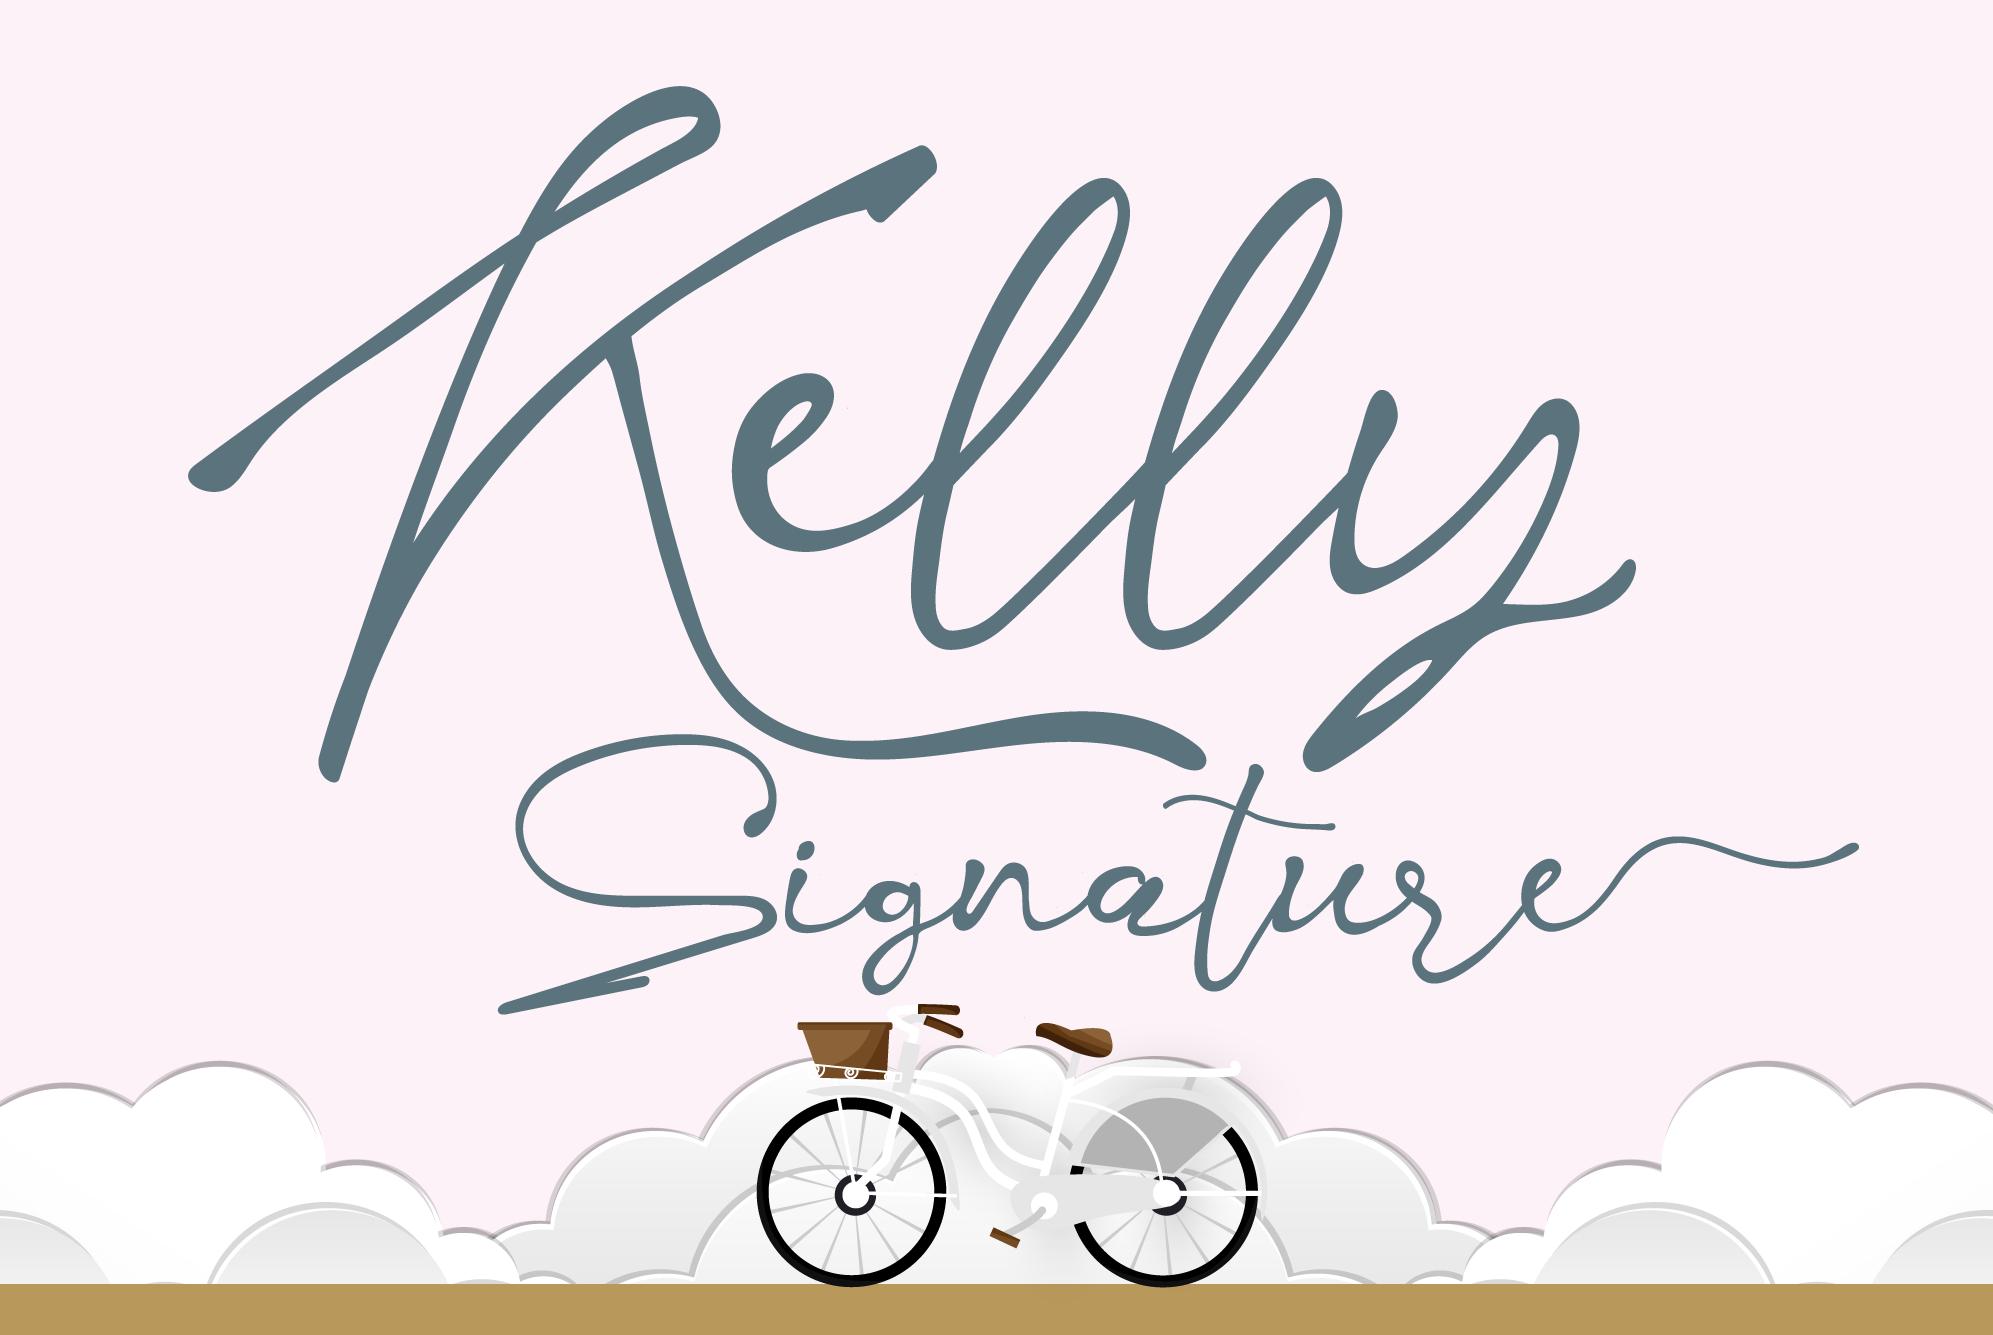 Kelly Signature Font